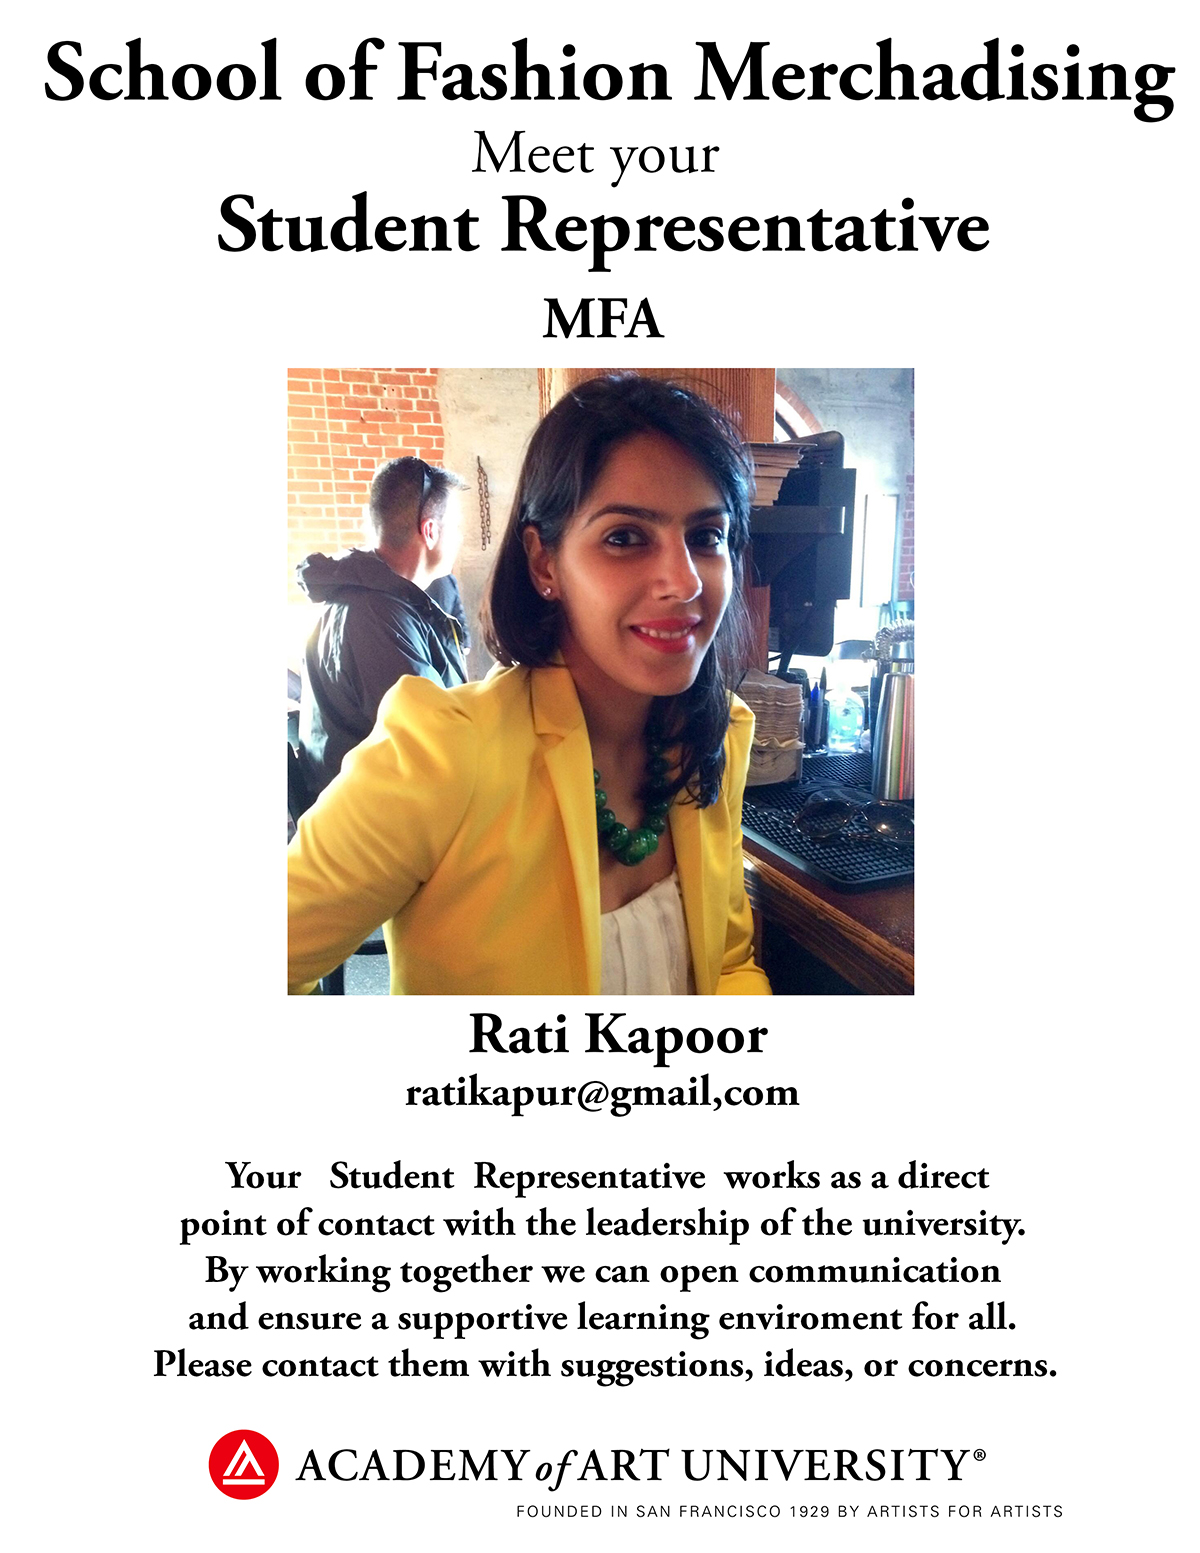 MFA Fashion Merchandising student representative Rati Kapoor/email: ratikapur@gmail.com 